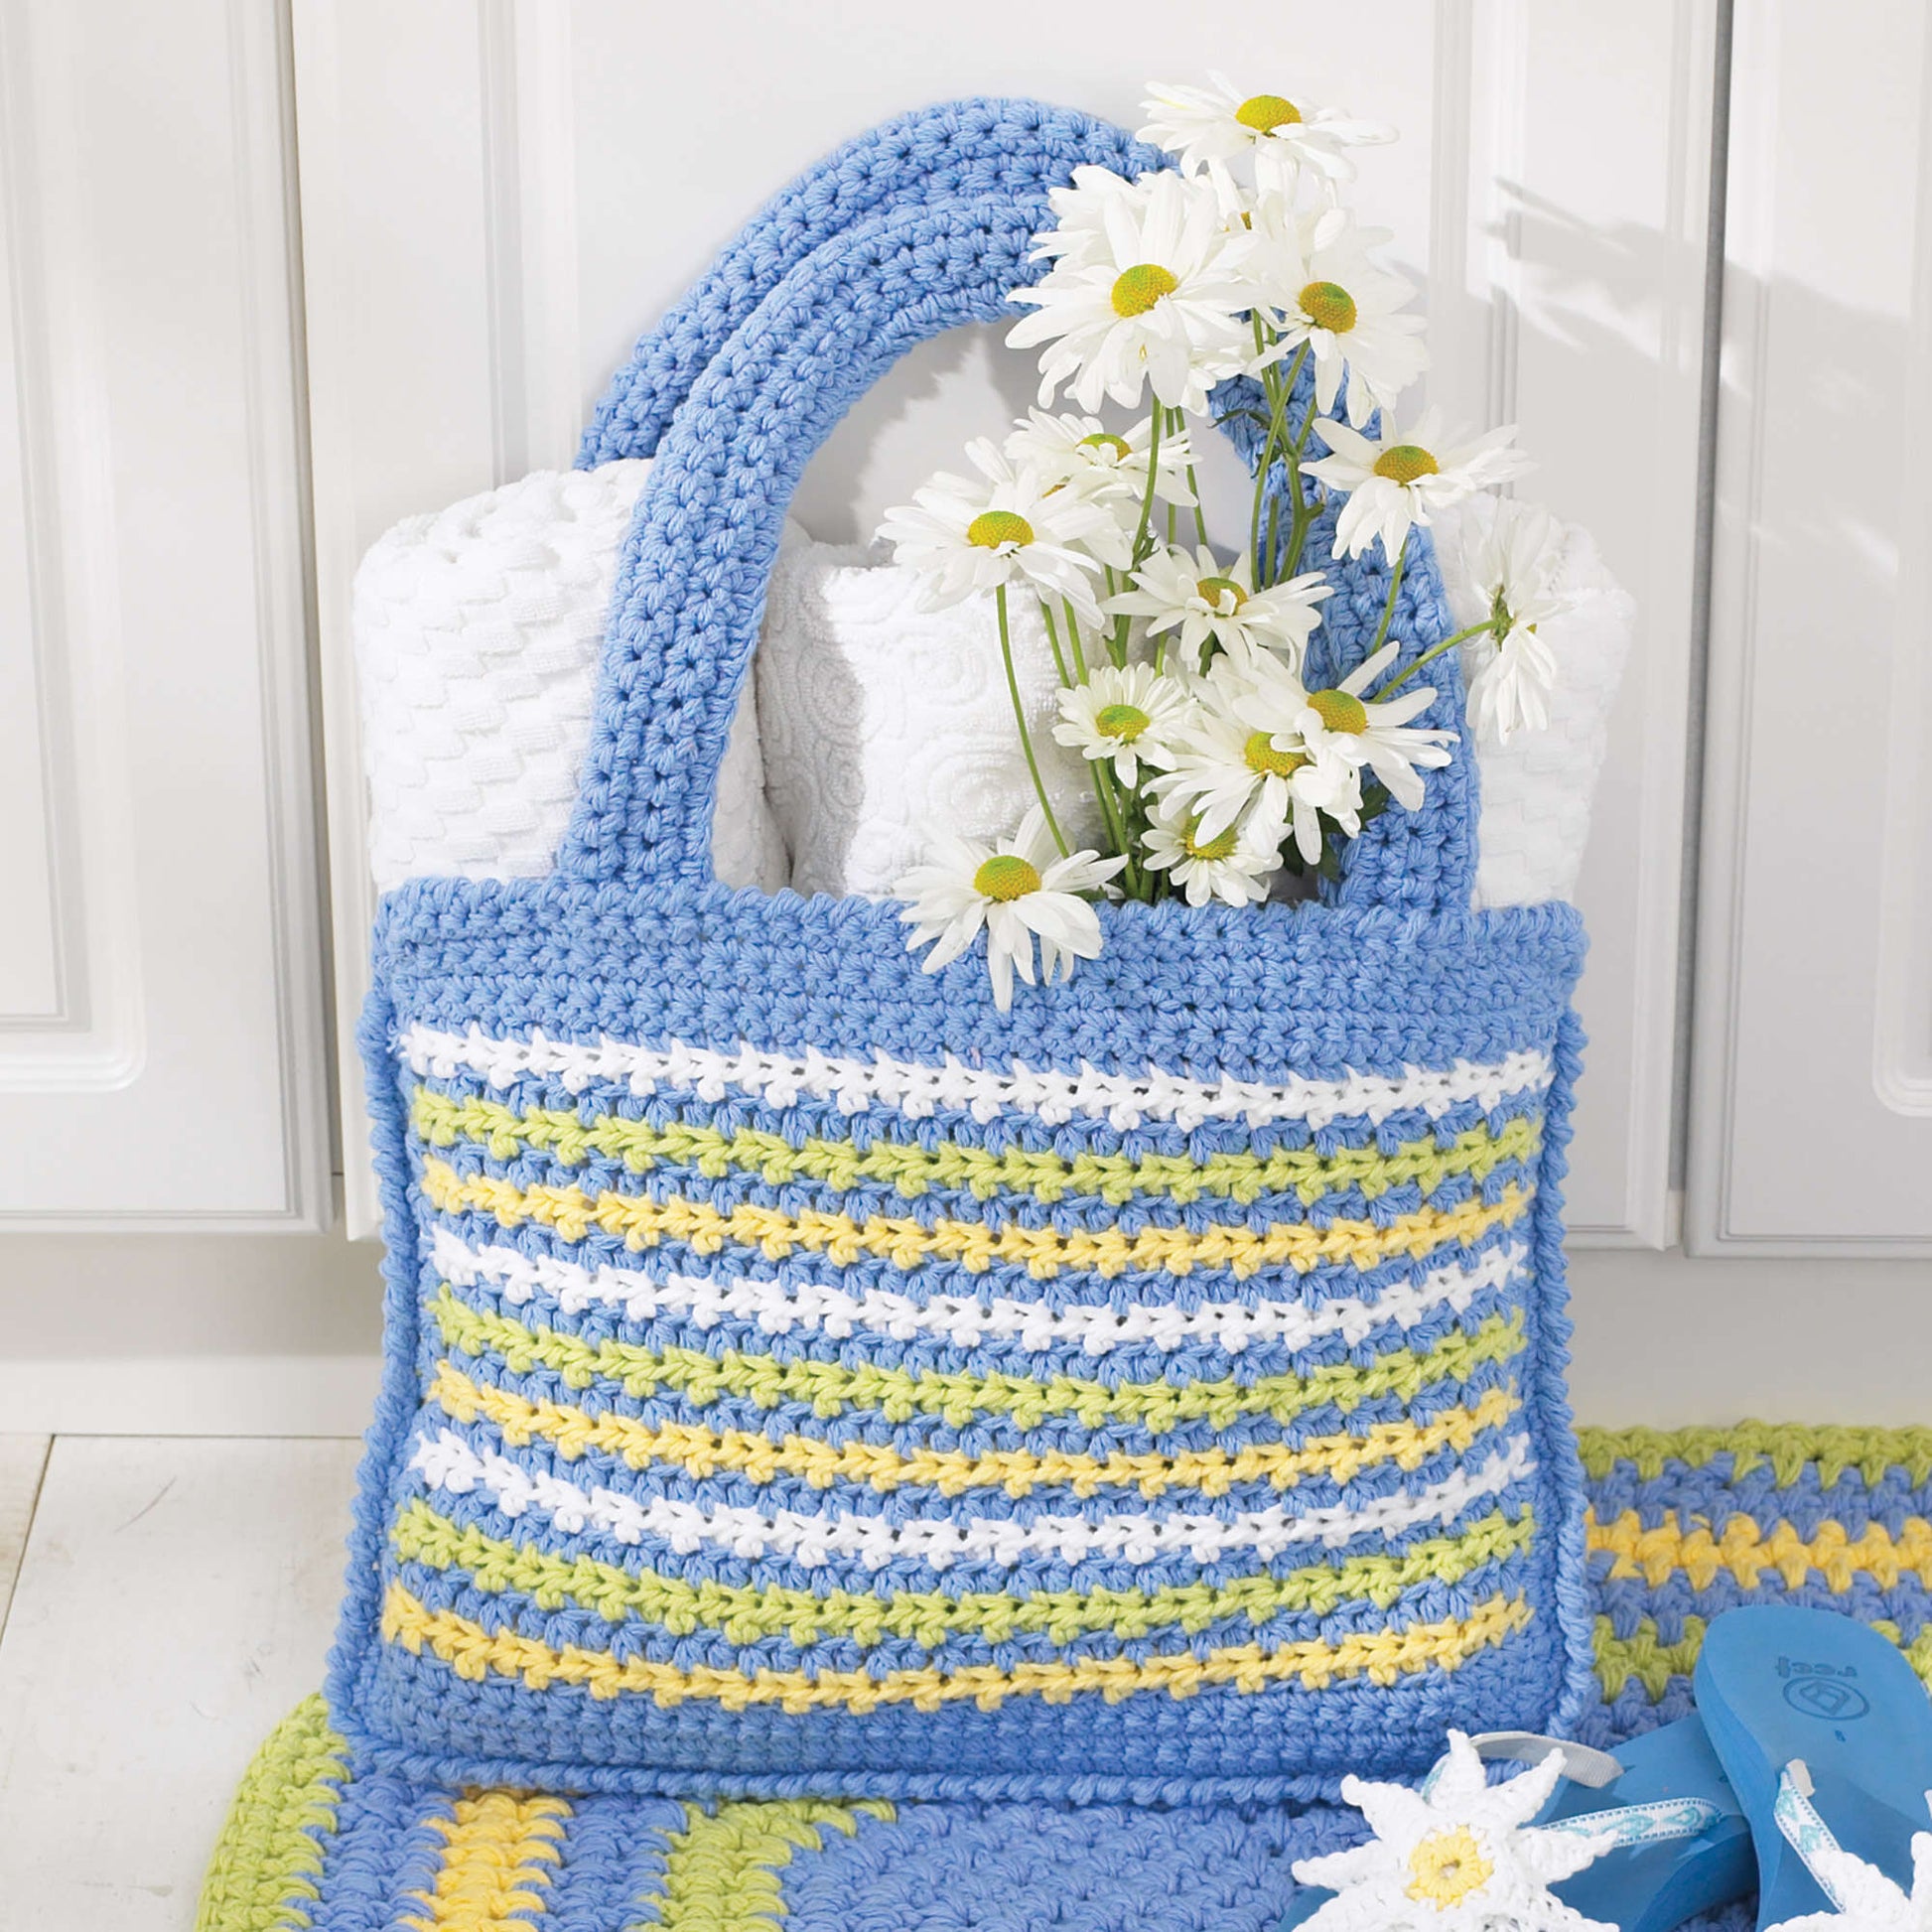 Bernat Shopping Tote Bag Crochet Bag made in Bernat Handicrafter Cotton yarn